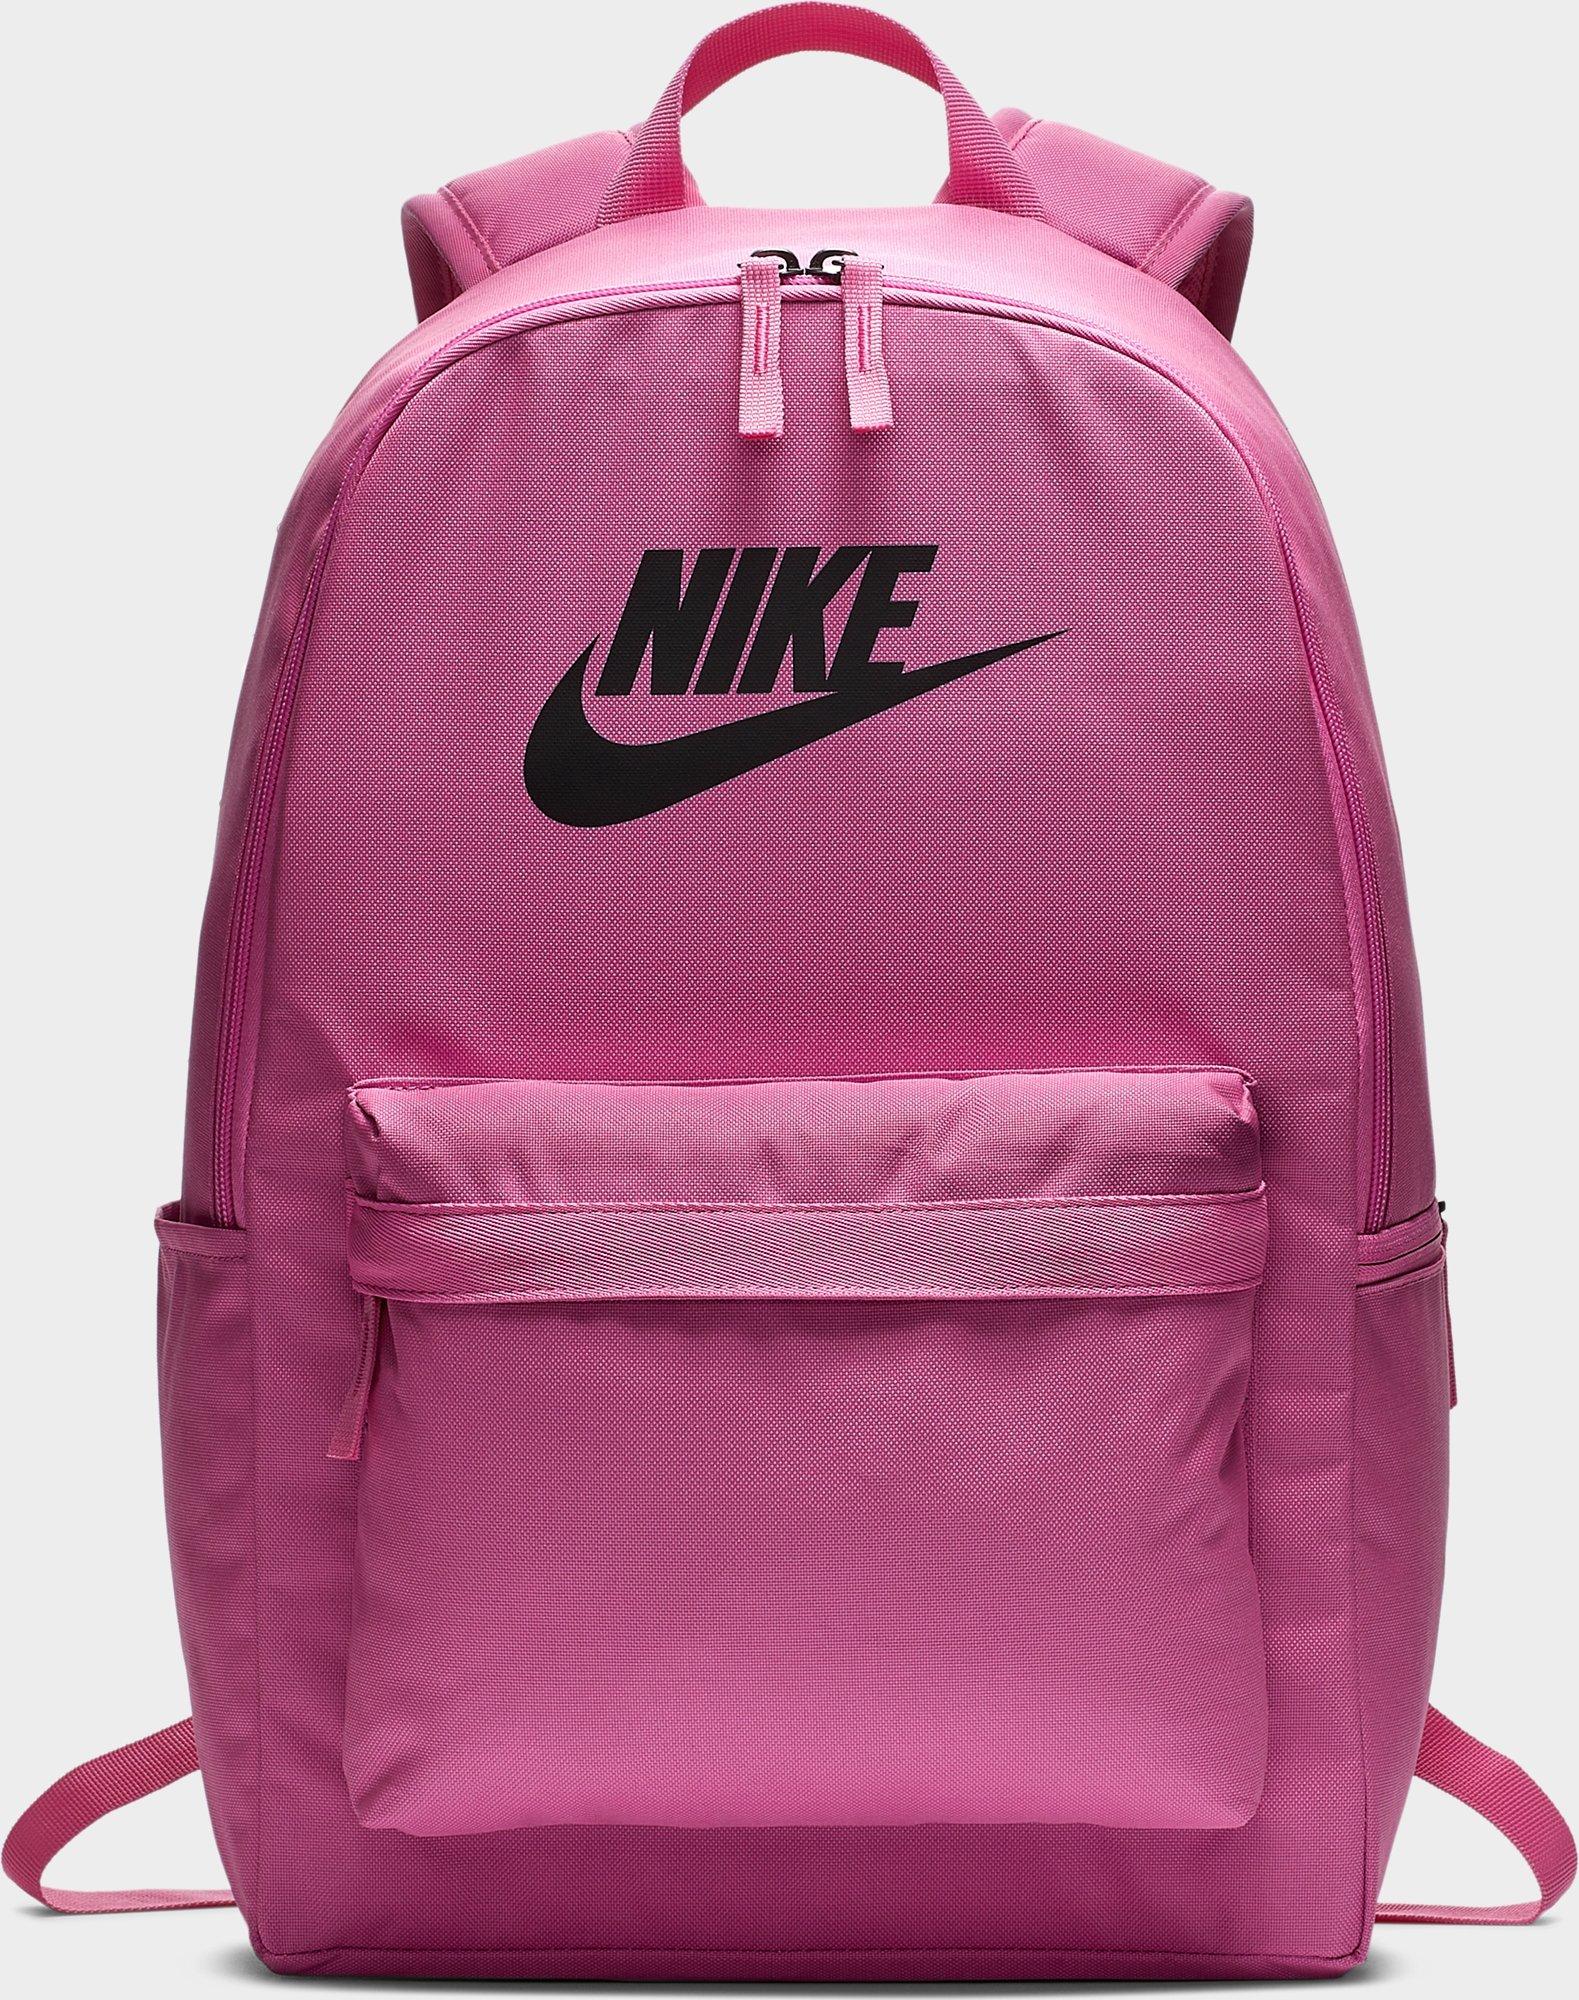 pink and black nike bookbag